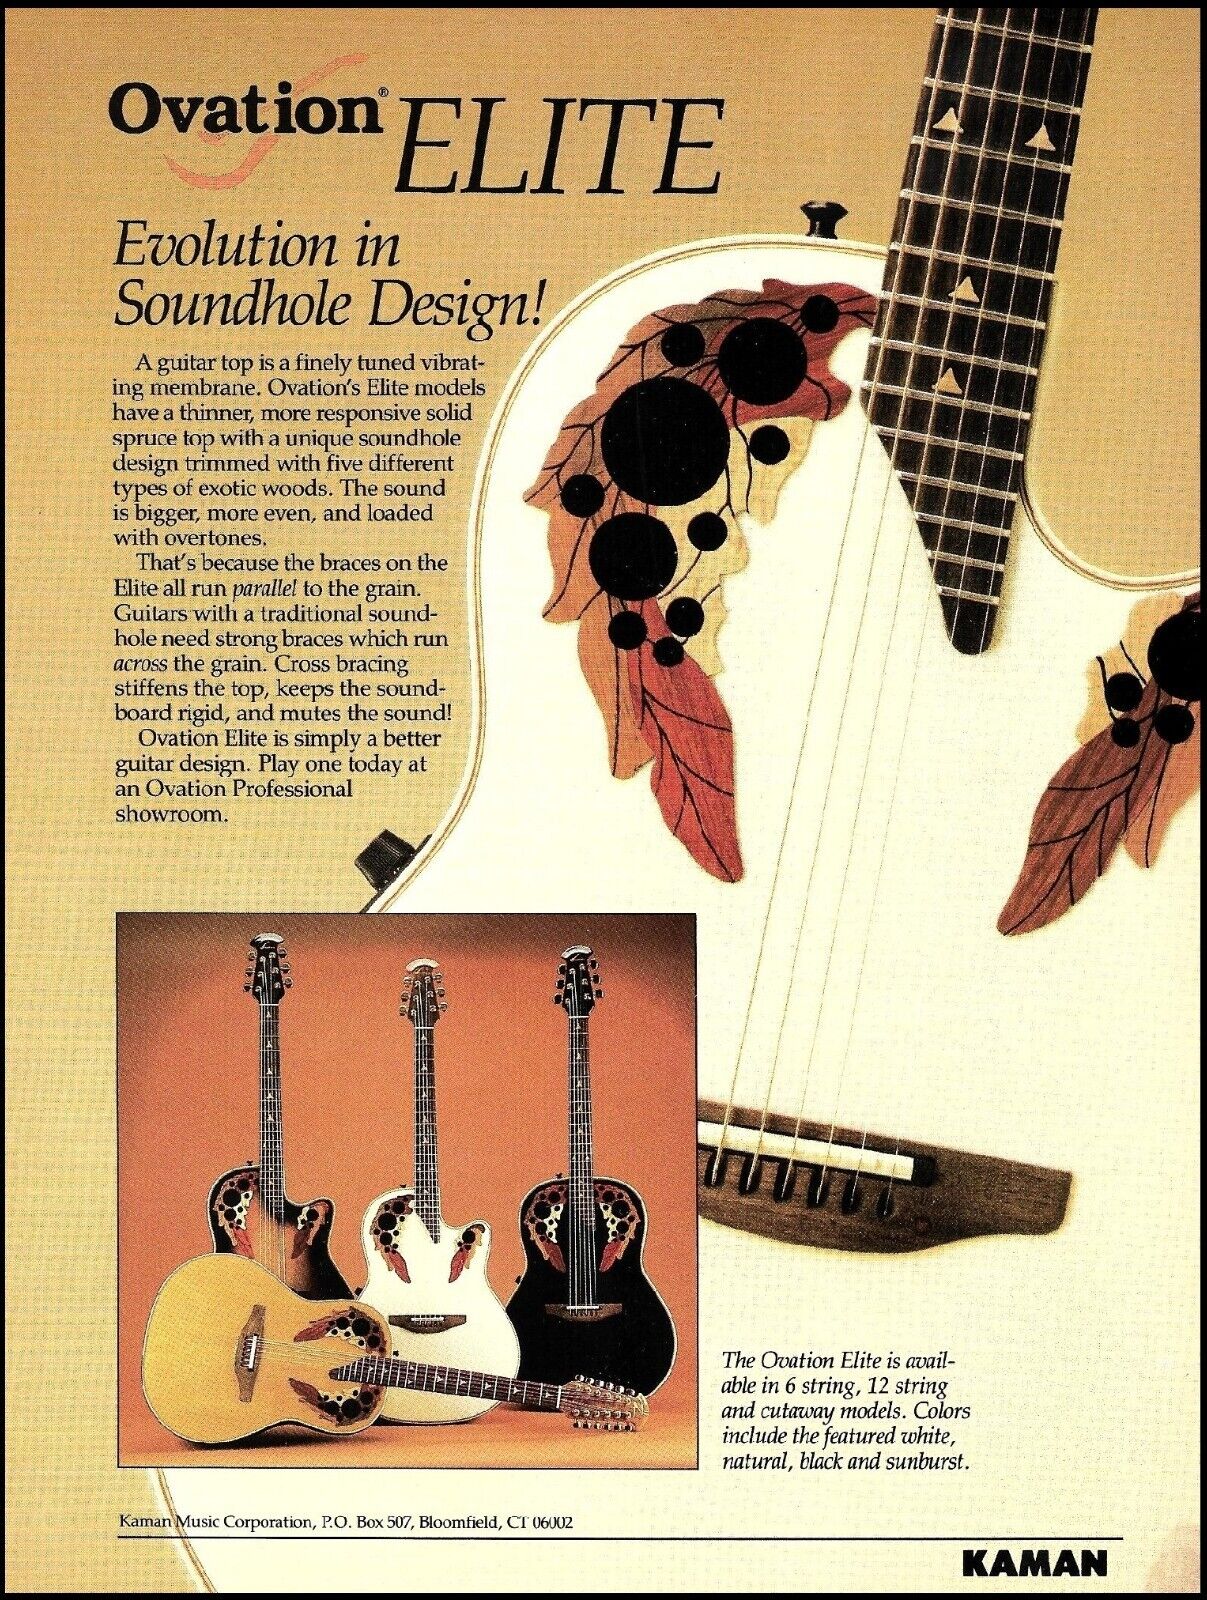 The 1989 Ovation Elite Series guitar advertisement 8 x 11 original ad print